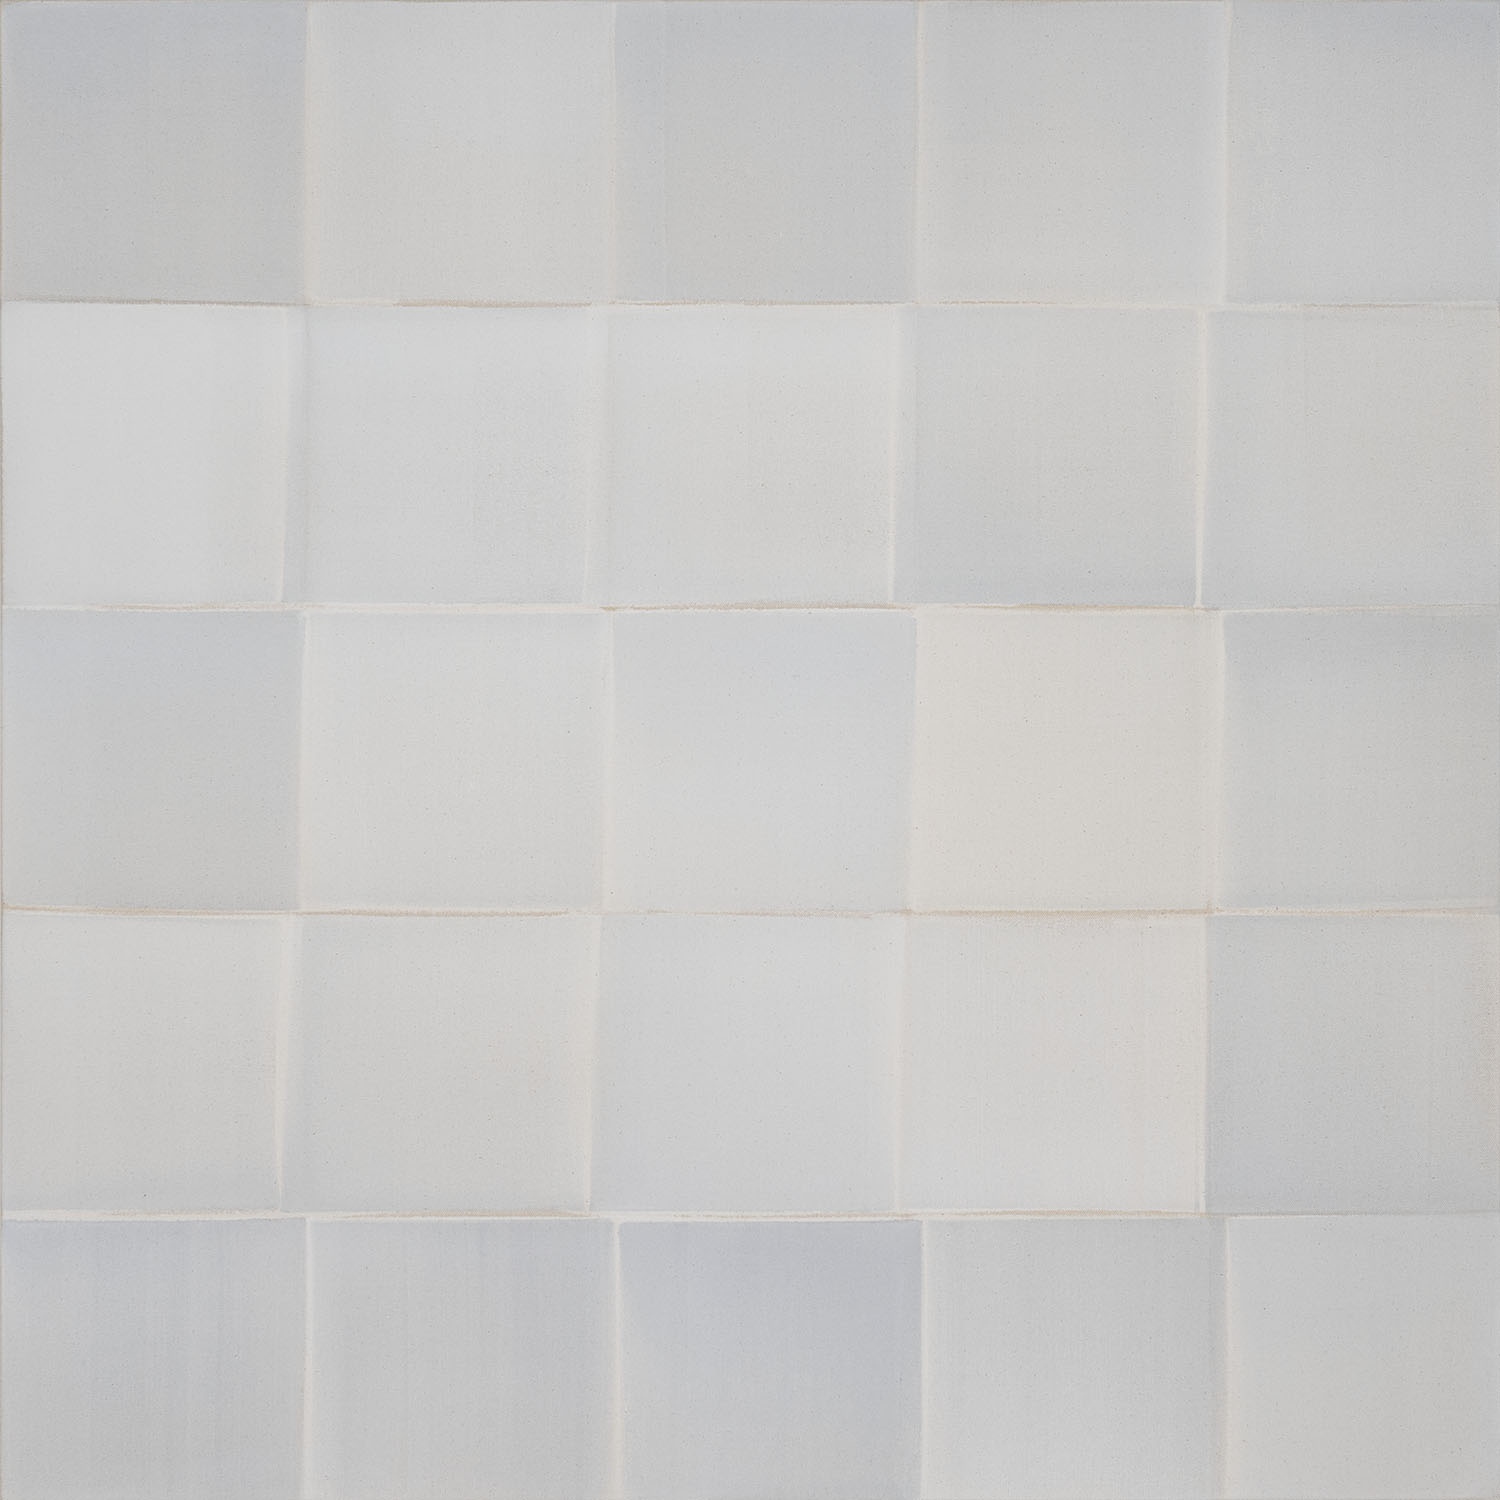 Nikola Dimitrov, Fuge, 2023, Pigmente, Bindemittel auf Leinwand, 100 x 100 cm